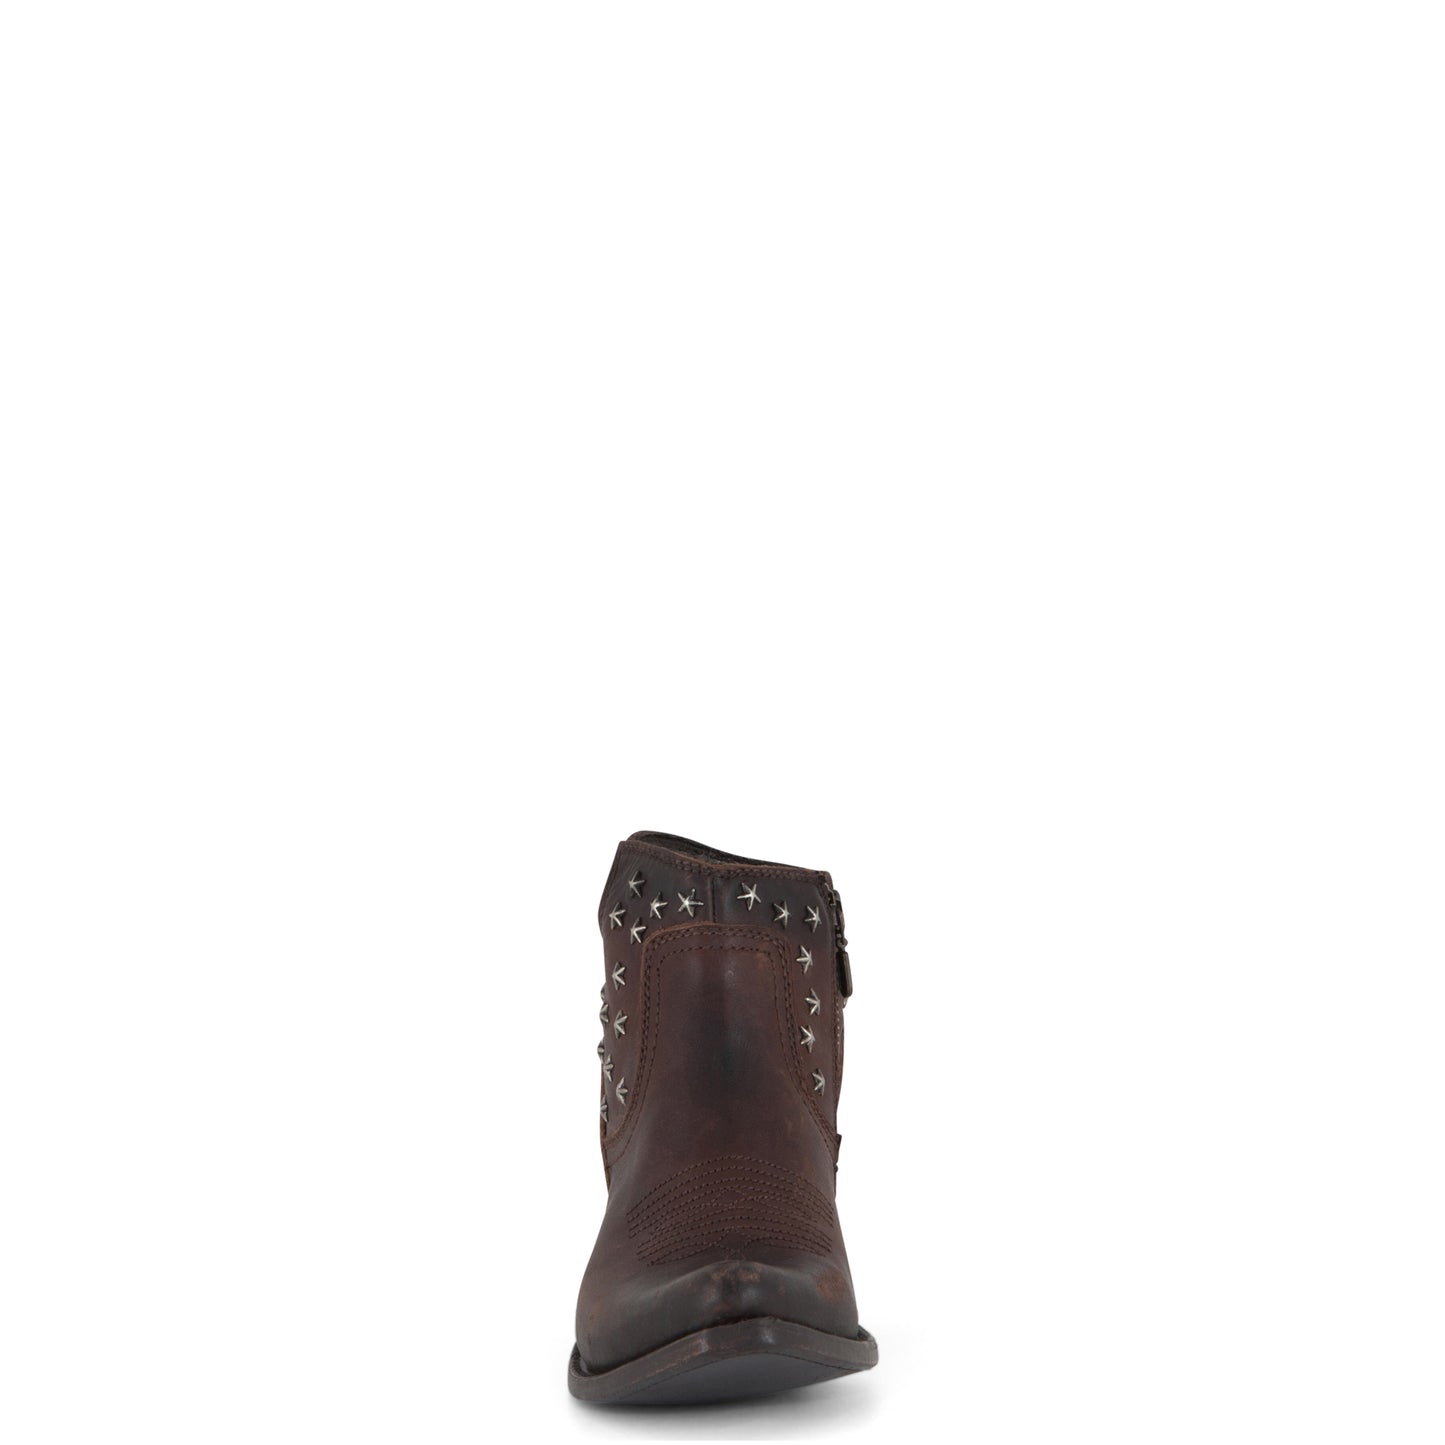 Women's Liberty Black Boots Toscano Tmoro Stonewashed #LB-812957-B